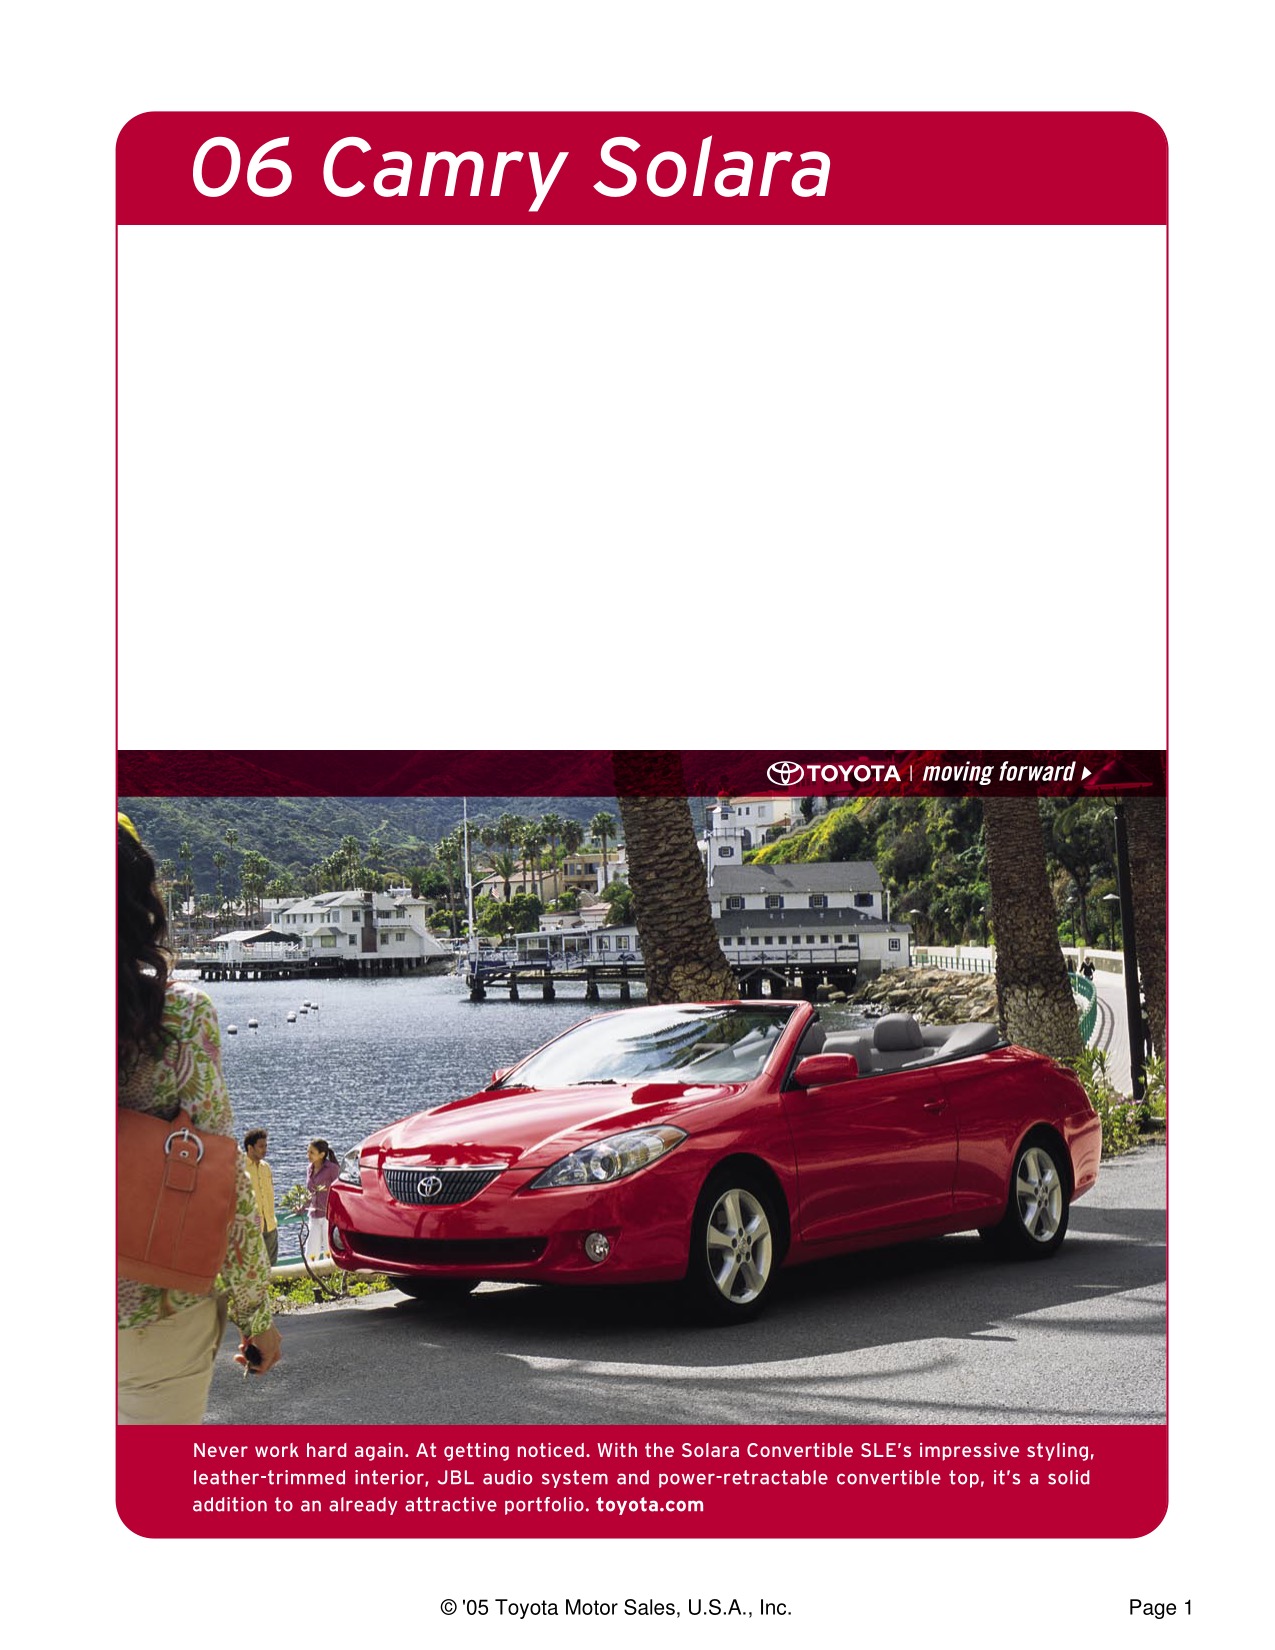 2006 Toyota Solara Brochure